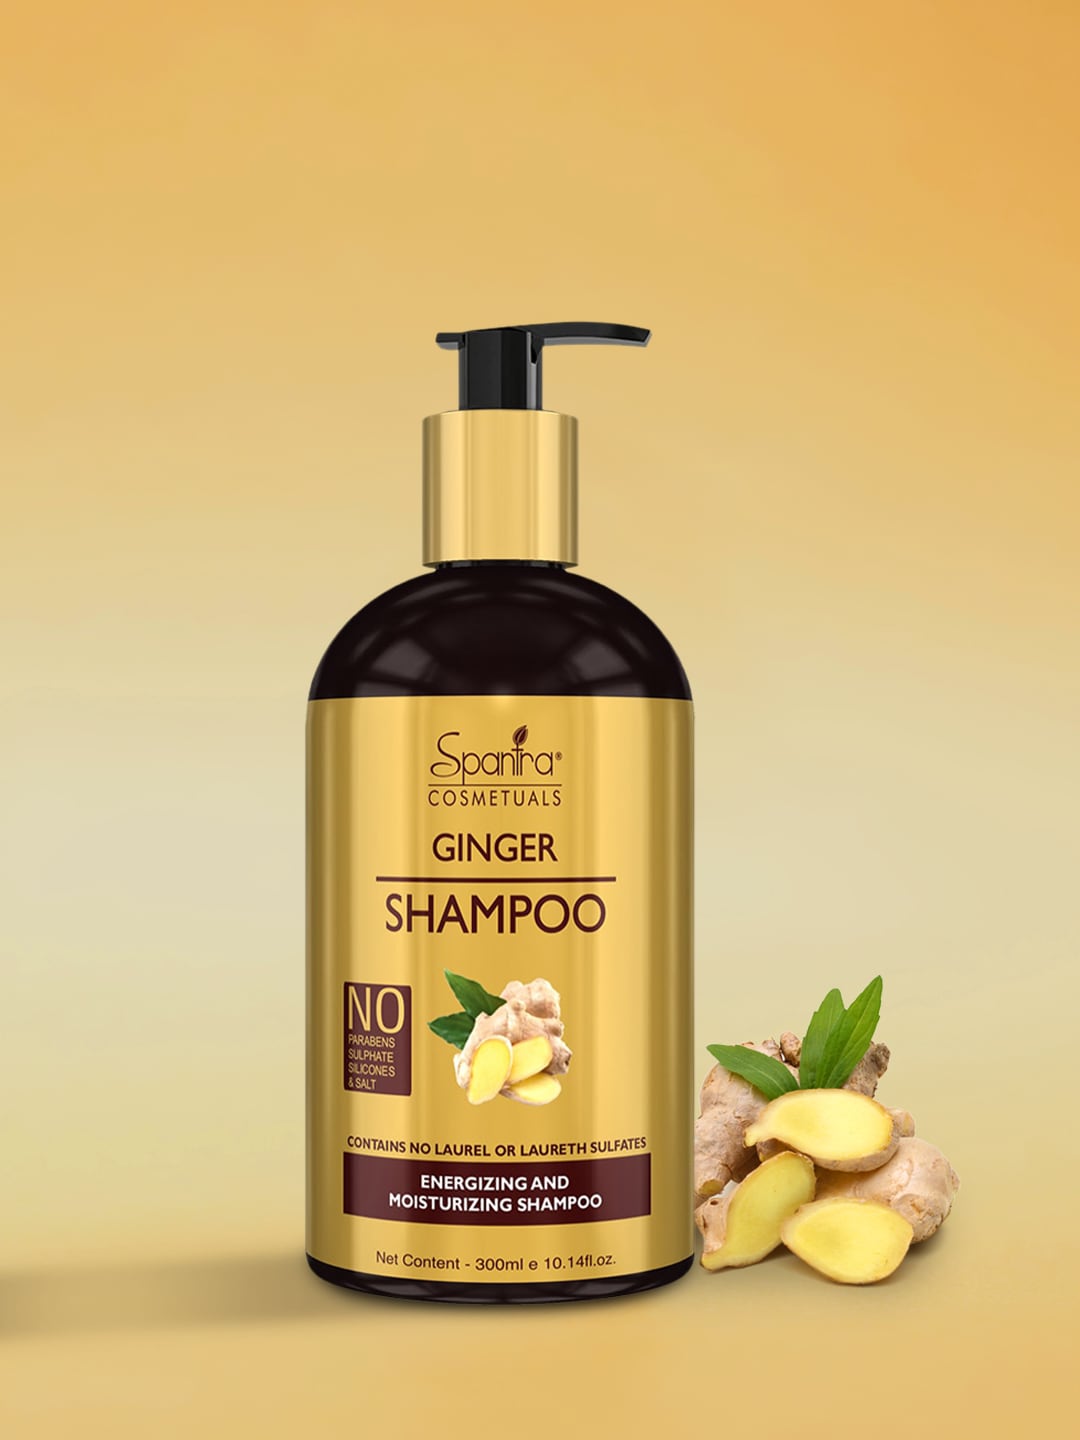 Spantra Unisex Ginger Shampoo 300 ml Price in India